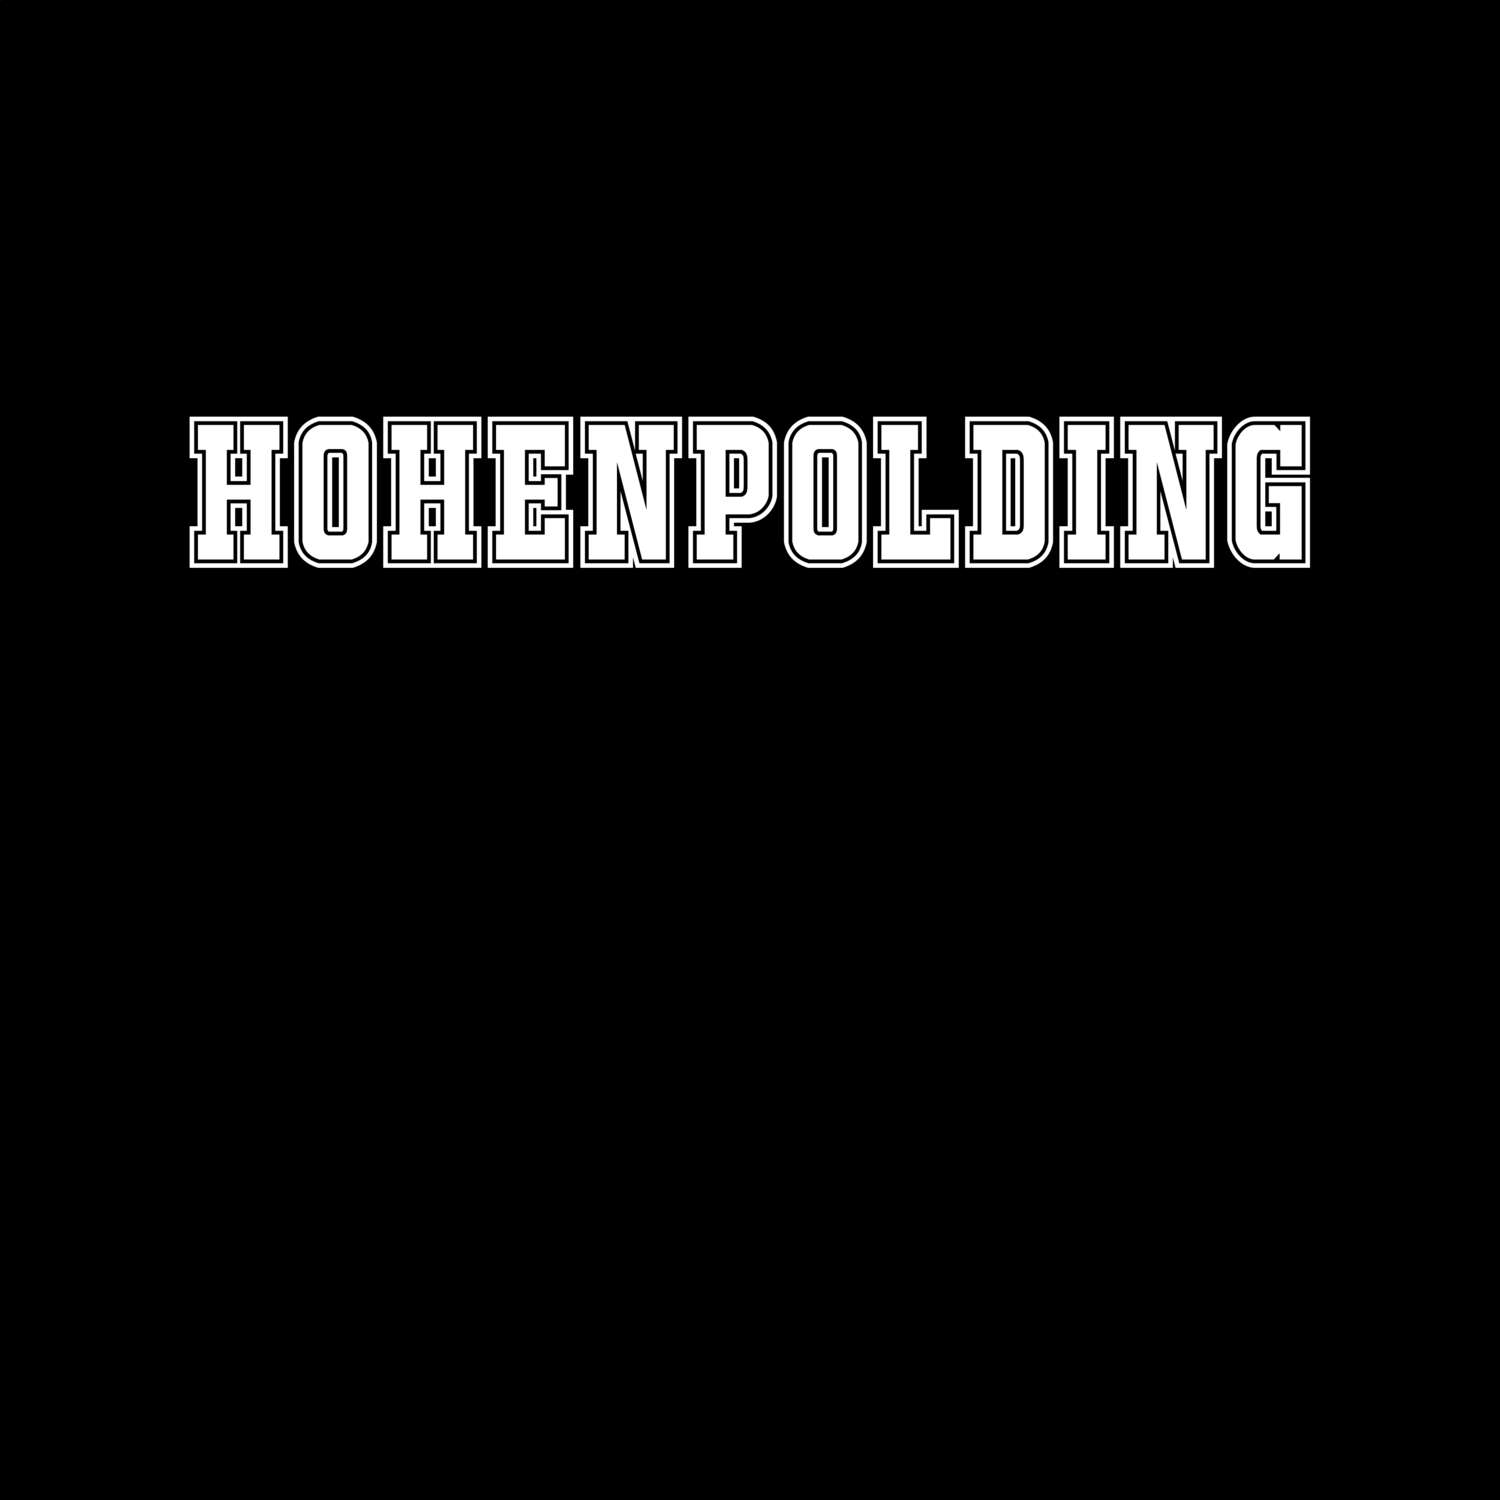 Hohenpolding T-Shirt »Classic«